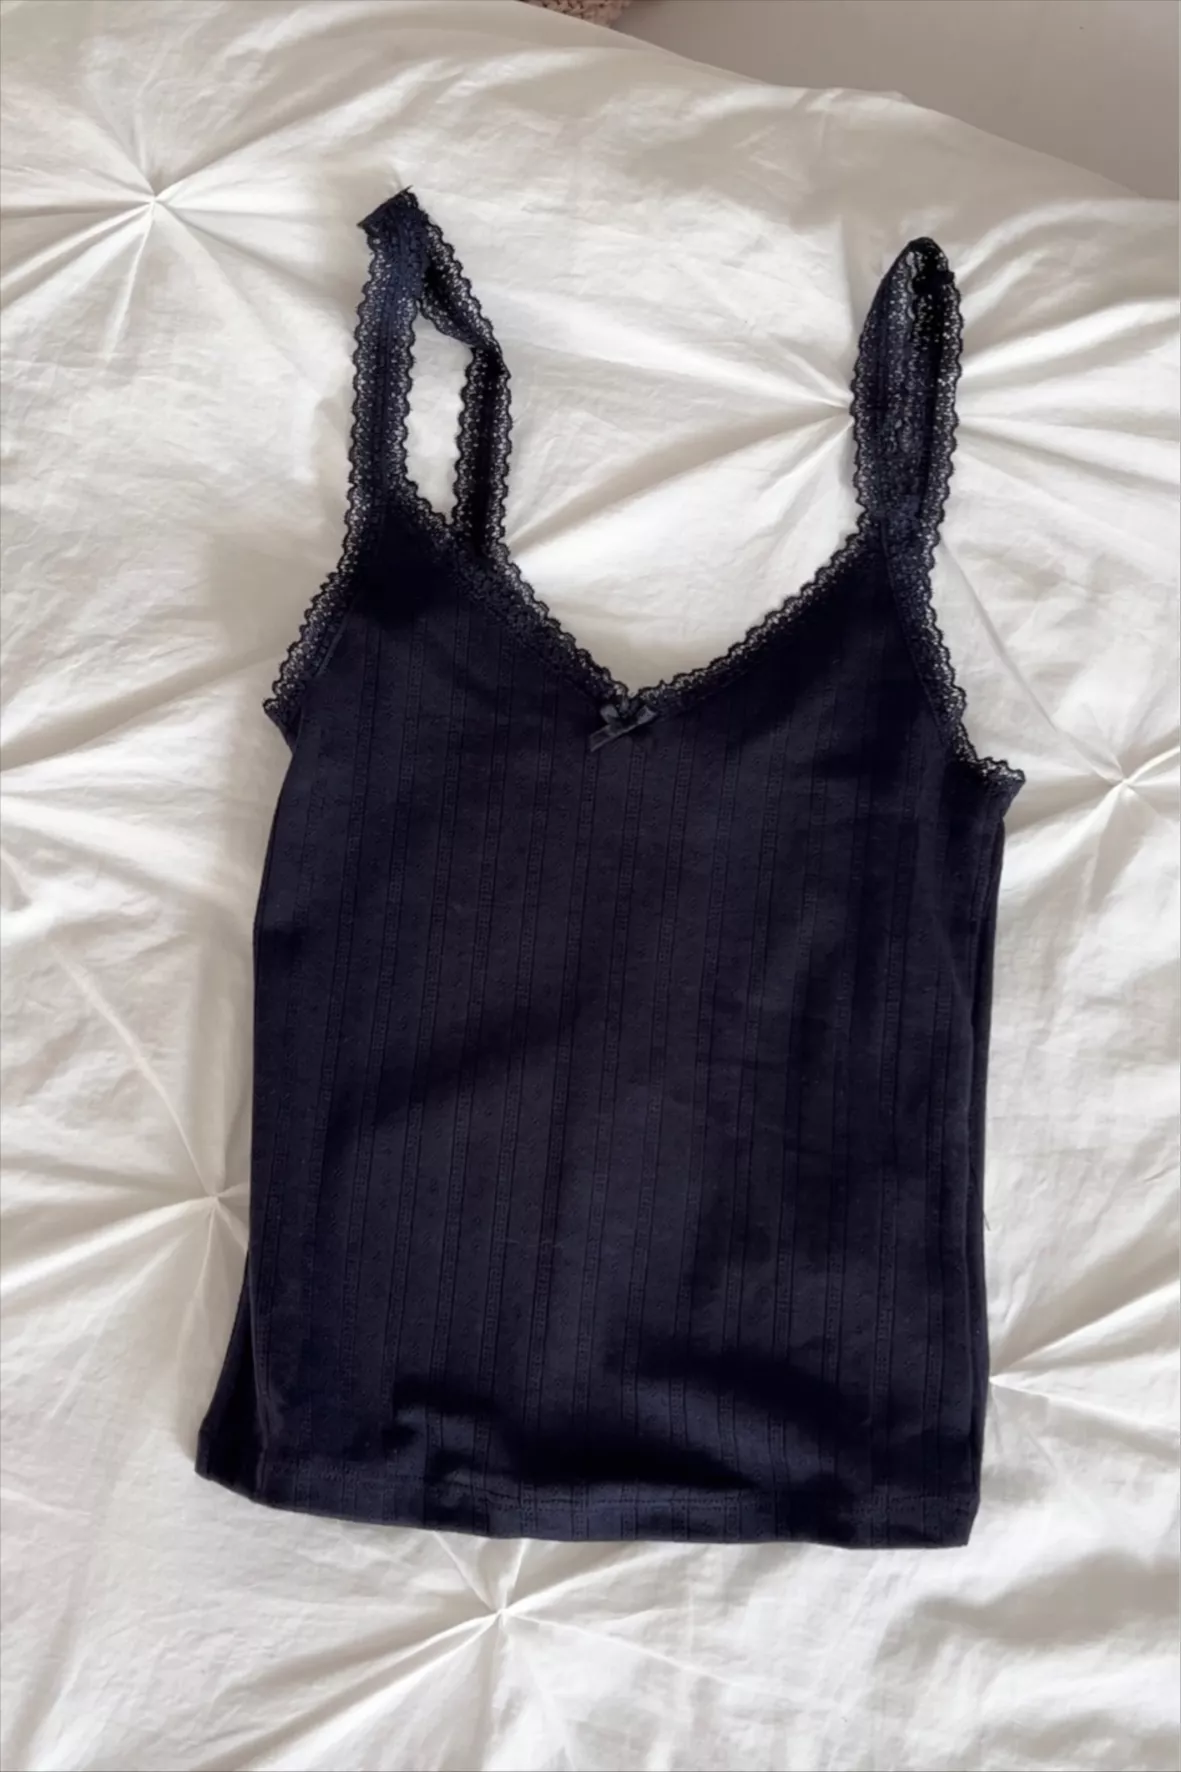 Brandy Melville - Brandy Melville Black Tank Top on Designer Wardrobe